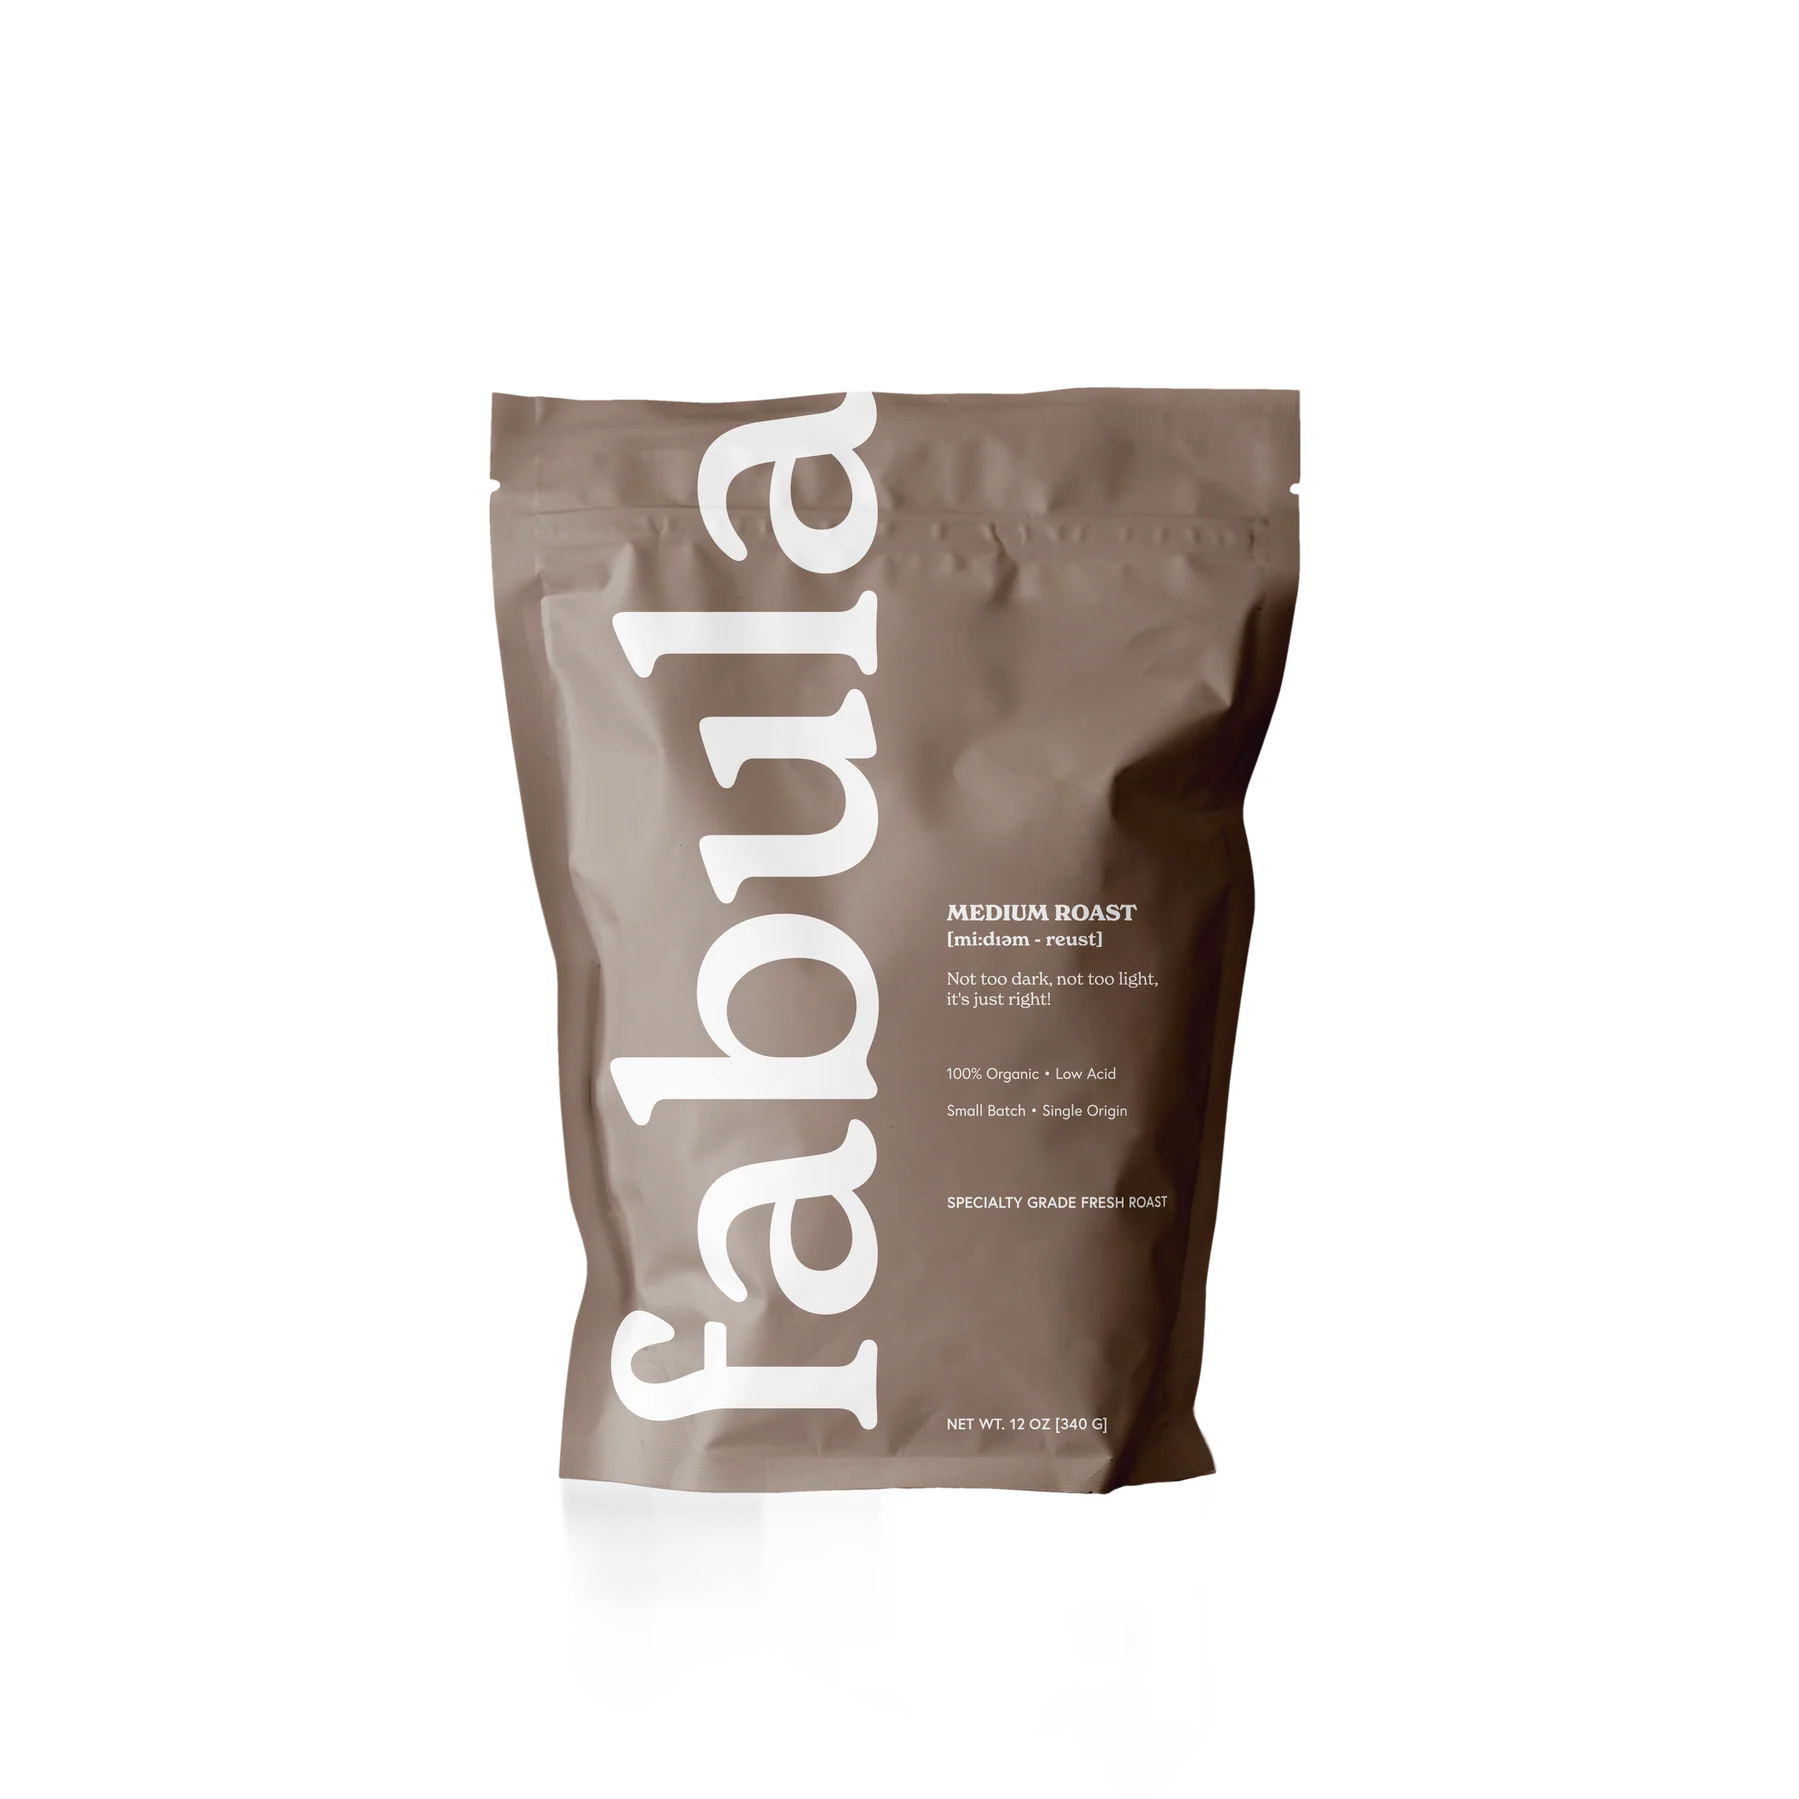 Fabula coffee medium roast_low acid coffee brands